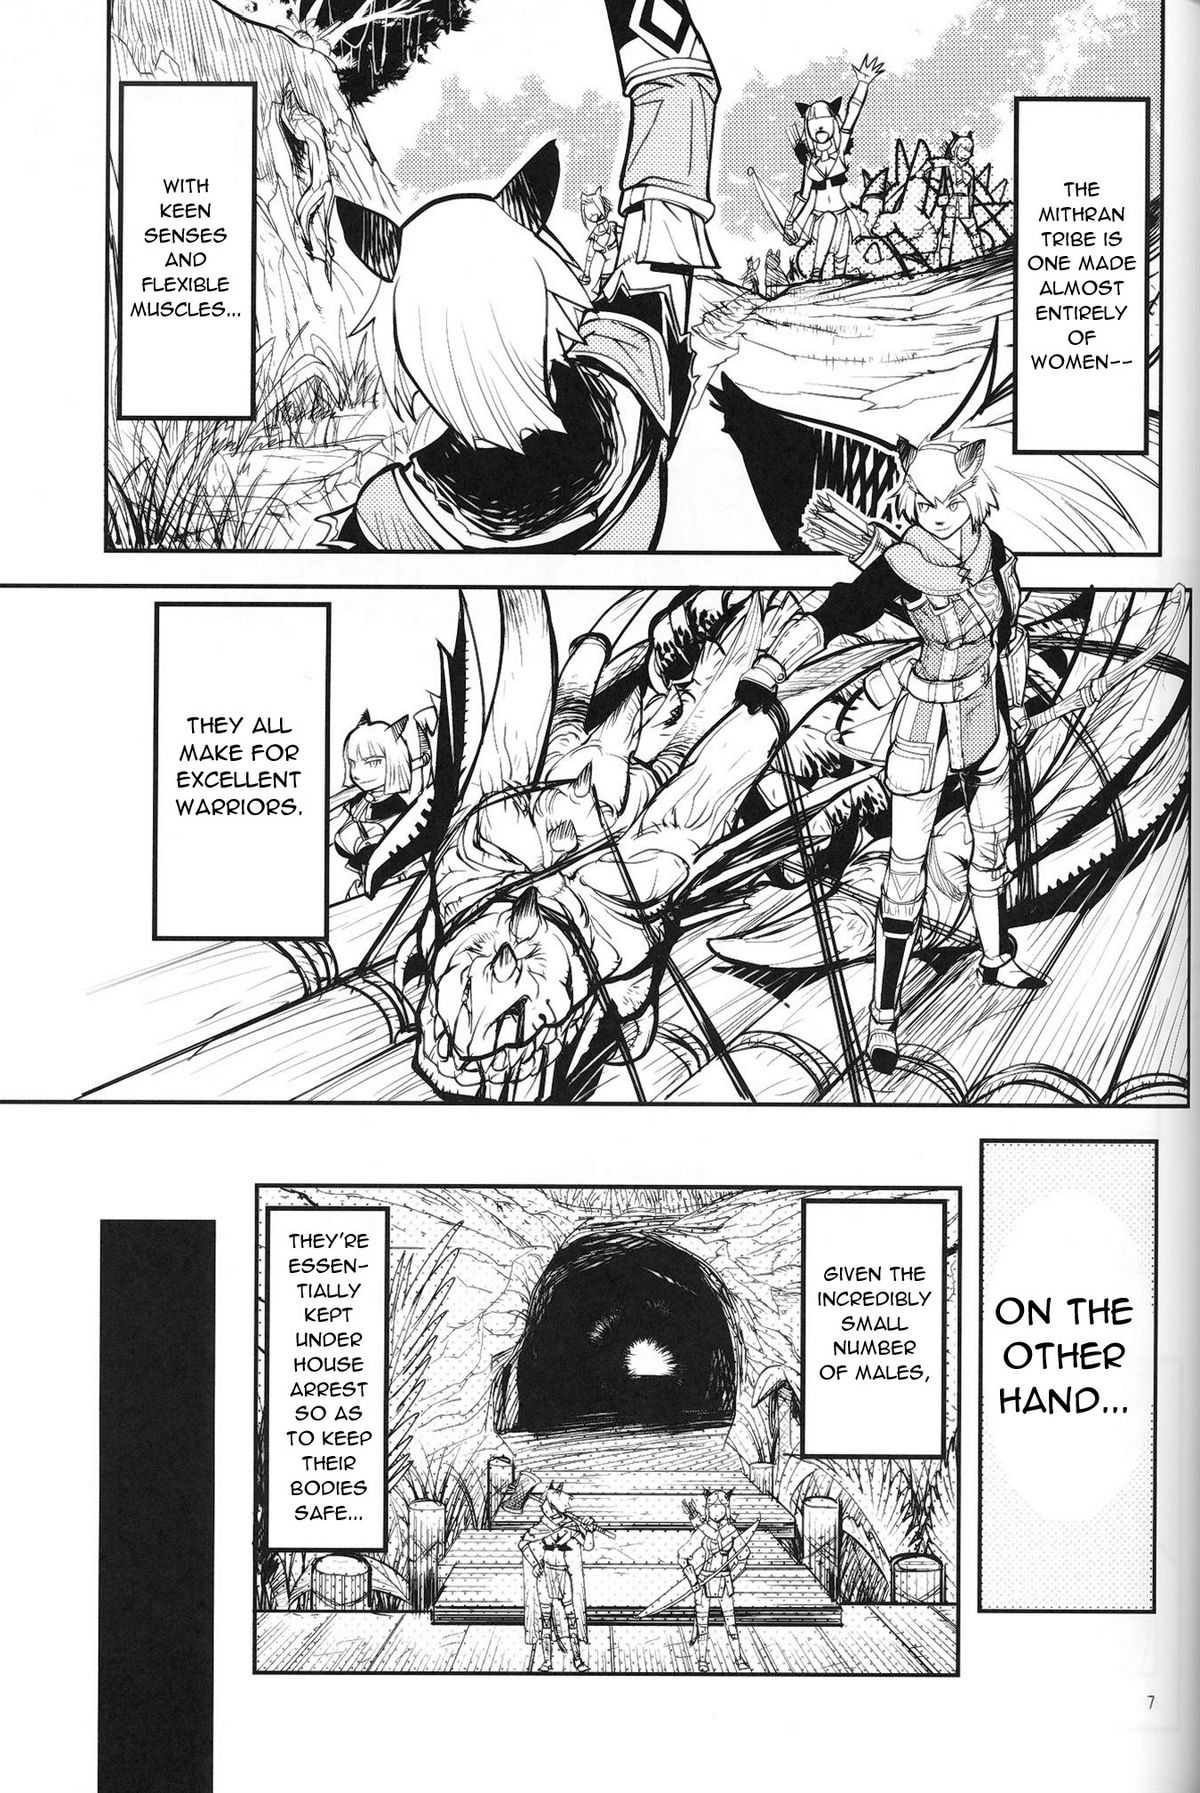 [Kurohiko] Kuroshiki Vol. 7 (Final Fantasy XI) [ENG] 